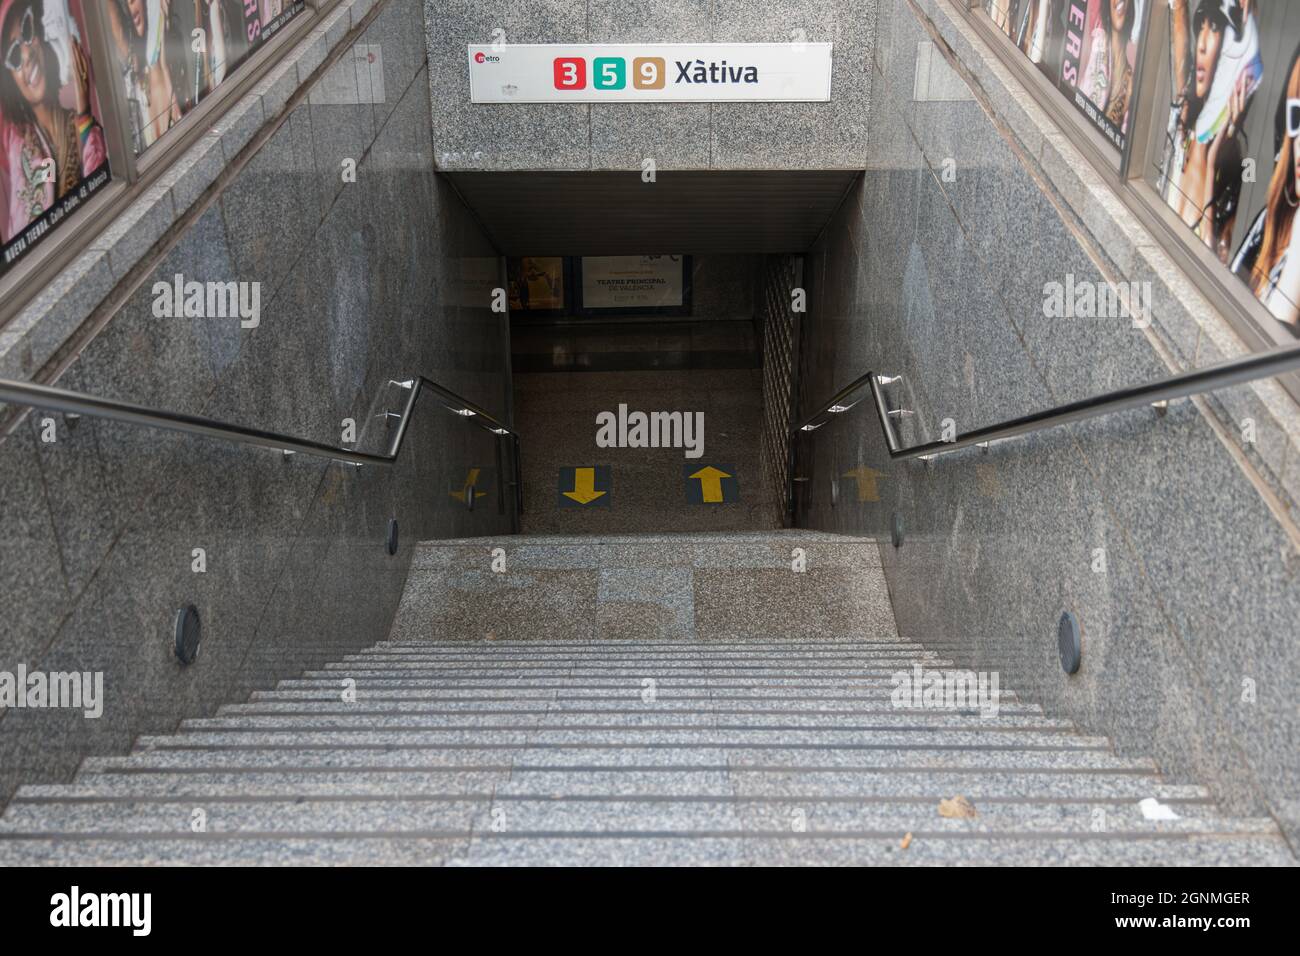 VALENCIA, SPANIEN - 25. SEPTEMBER 2021: Eingang zur Metrostation Xativa Stockfoto